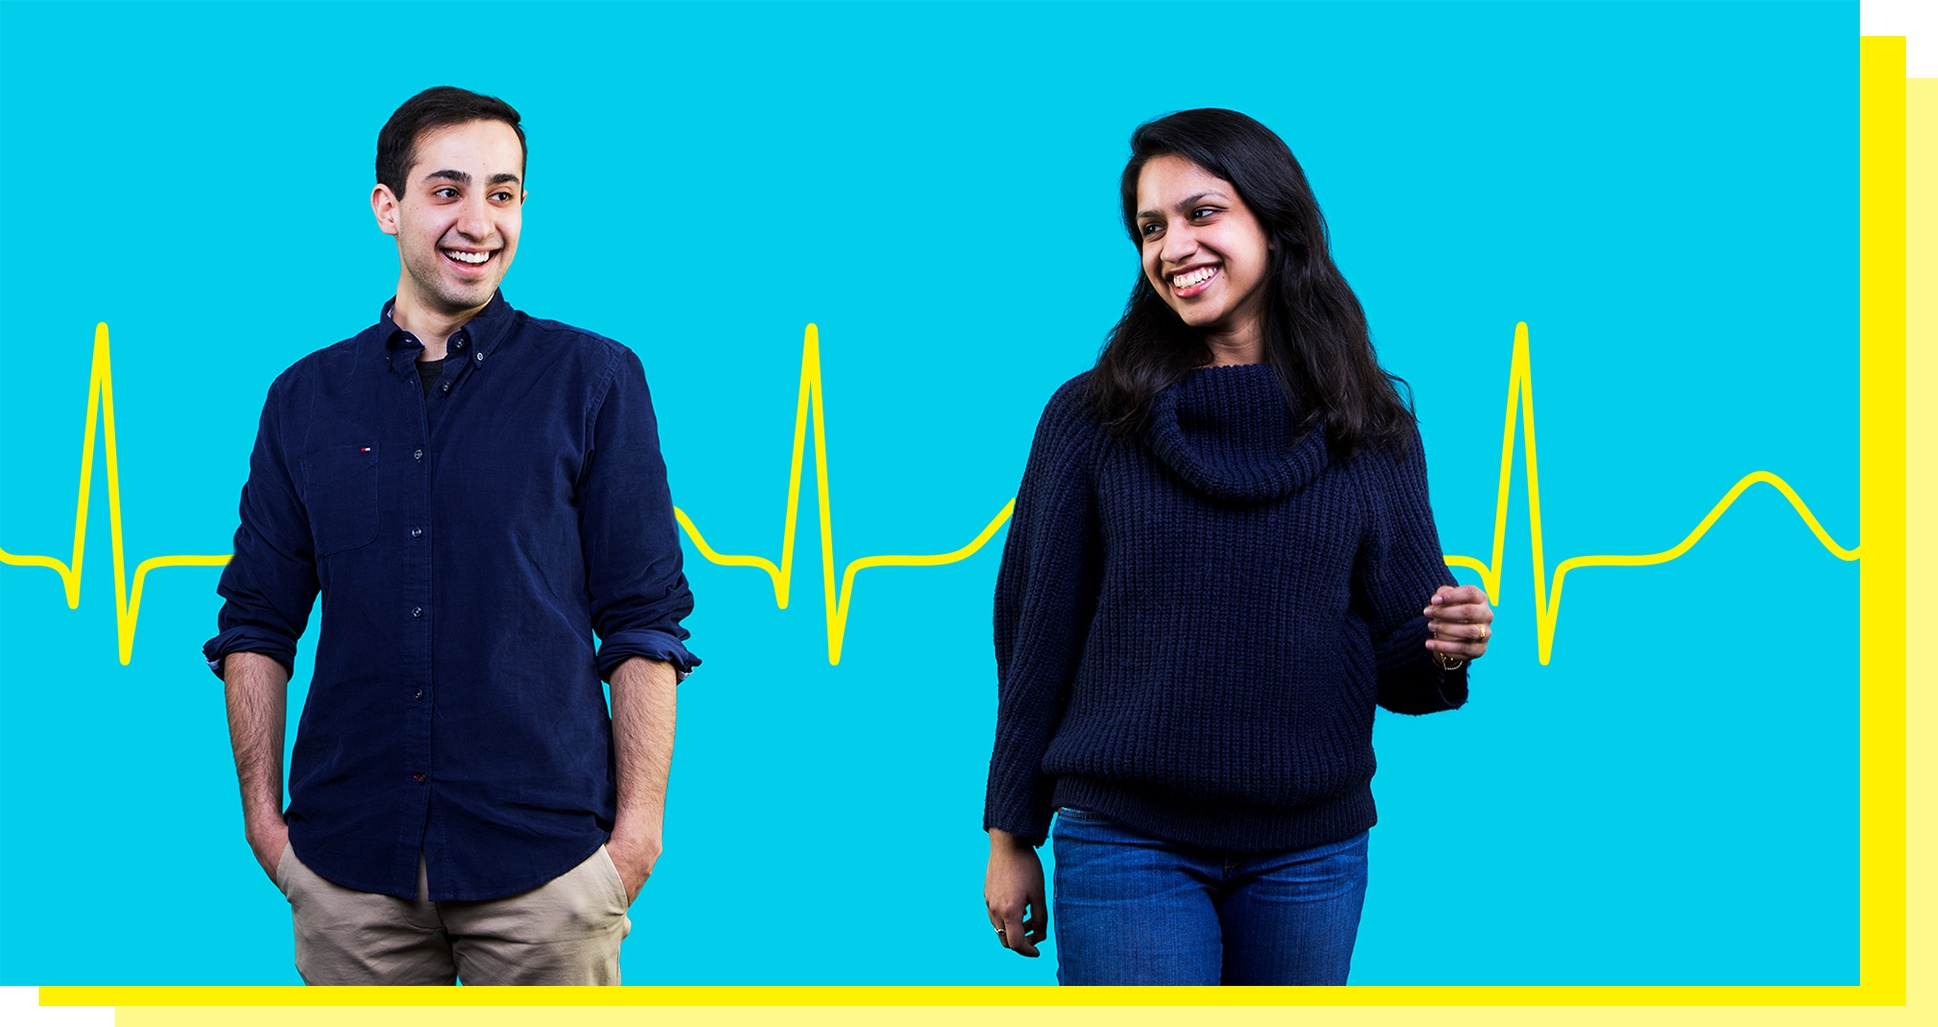 Saranya Ramadurai and Semran Thamer in front of a illustrated heartbeat.